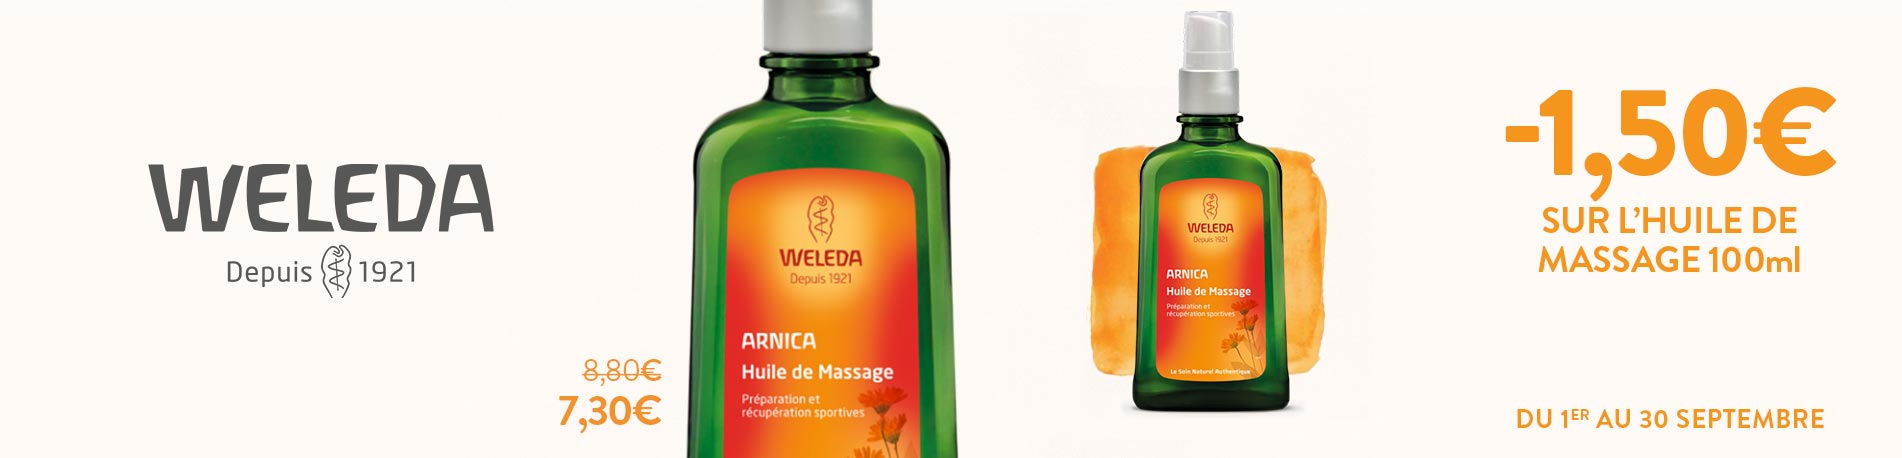 Promotion Weleda huile de massage arnica